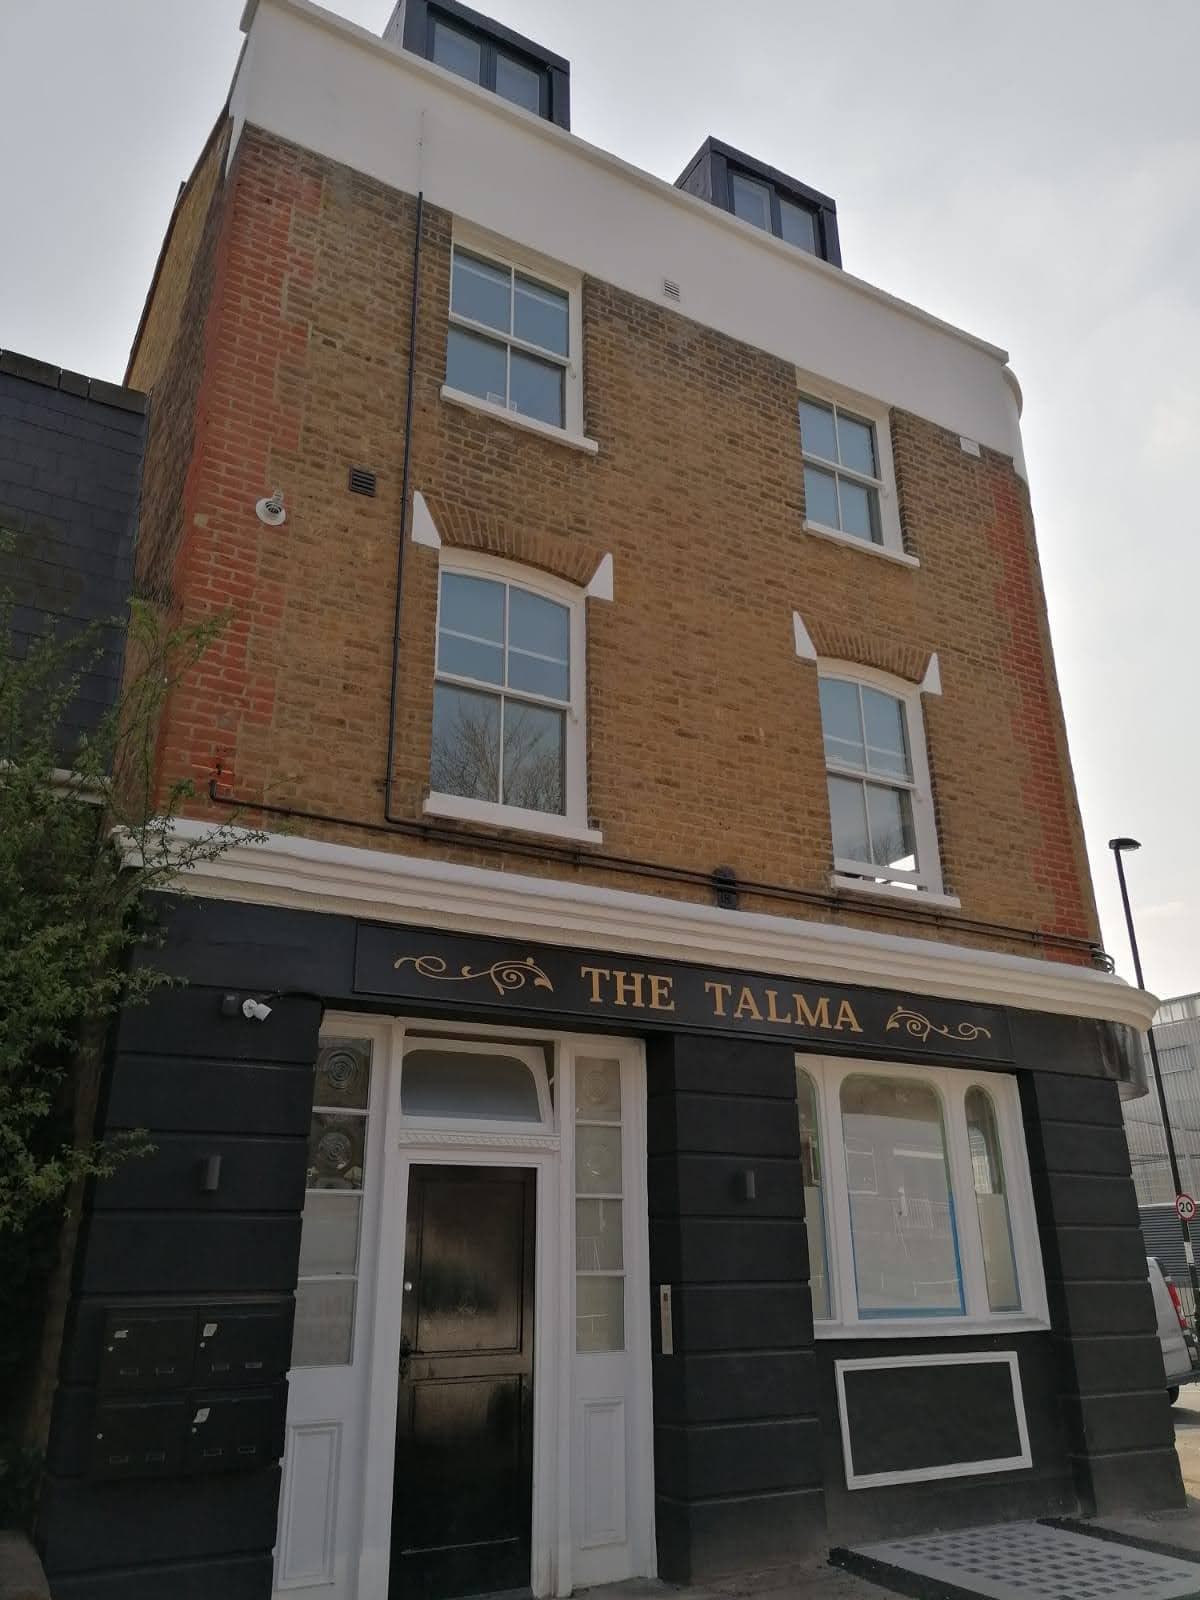 THE TALMA, CONVERSION OF A PUB INTO 4 FLATS IN SYDENHAM, LONDON